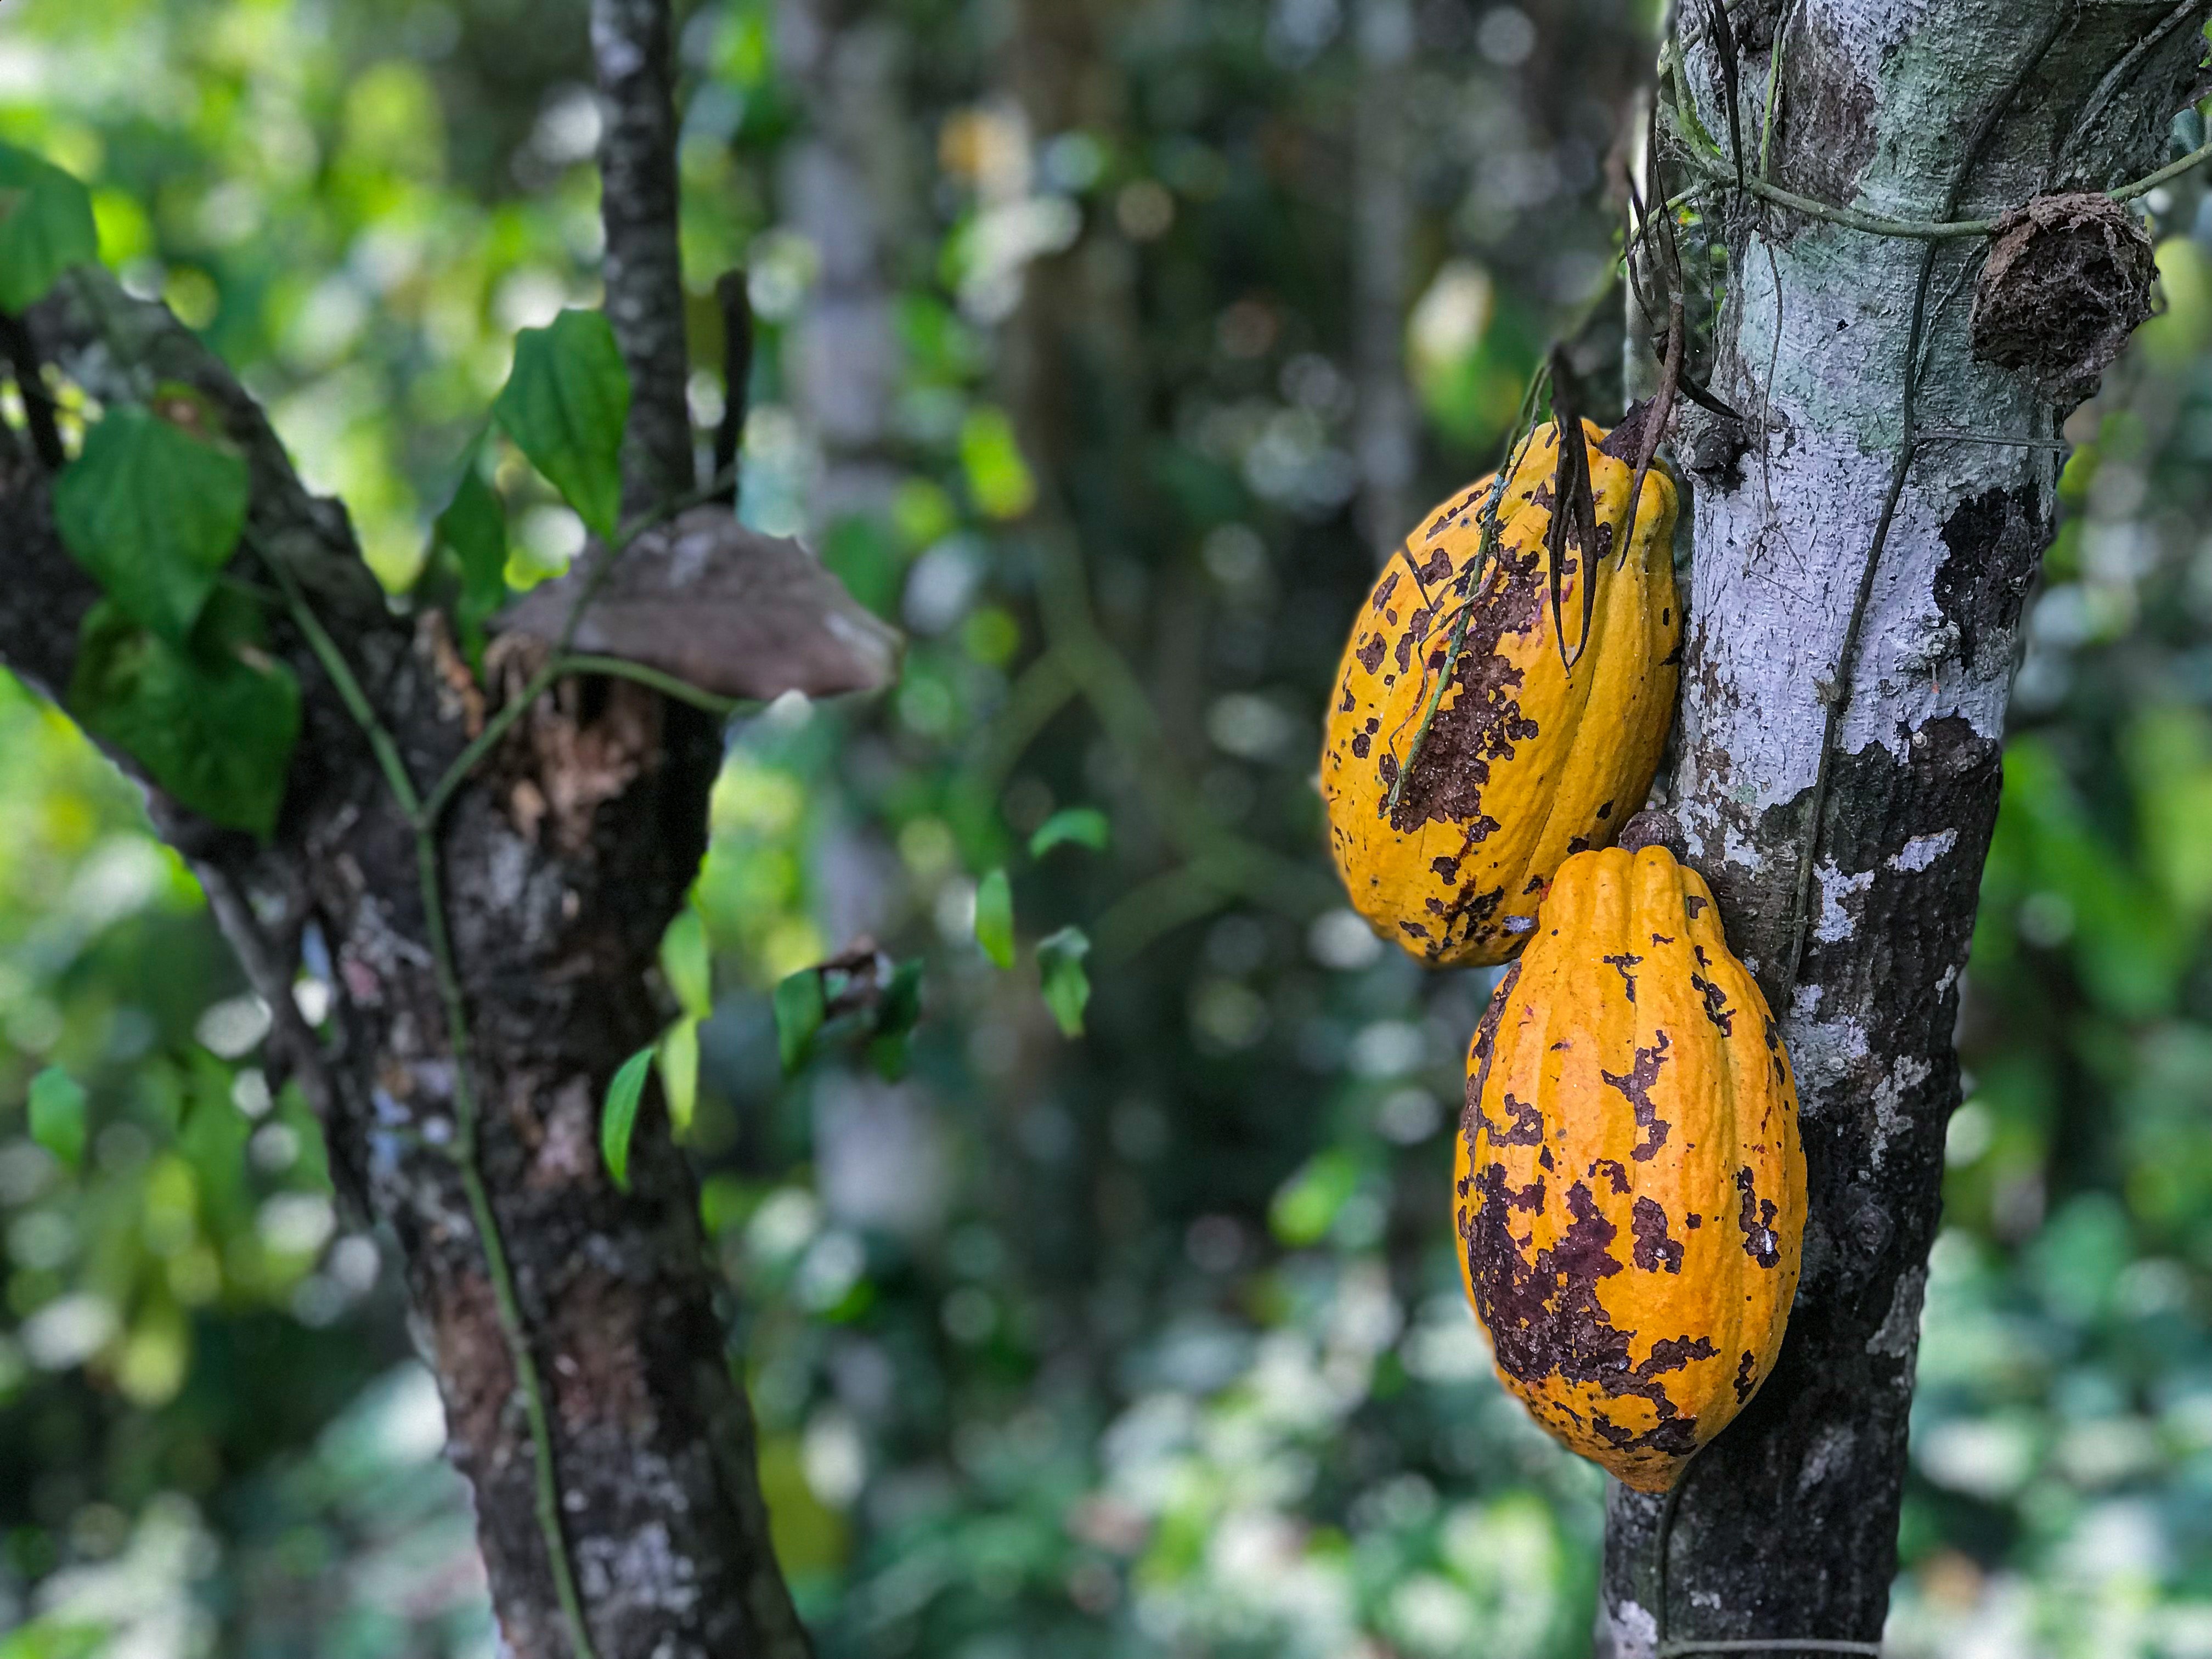 Cocoa plants. Photo: WFP/Kyle Hinkson